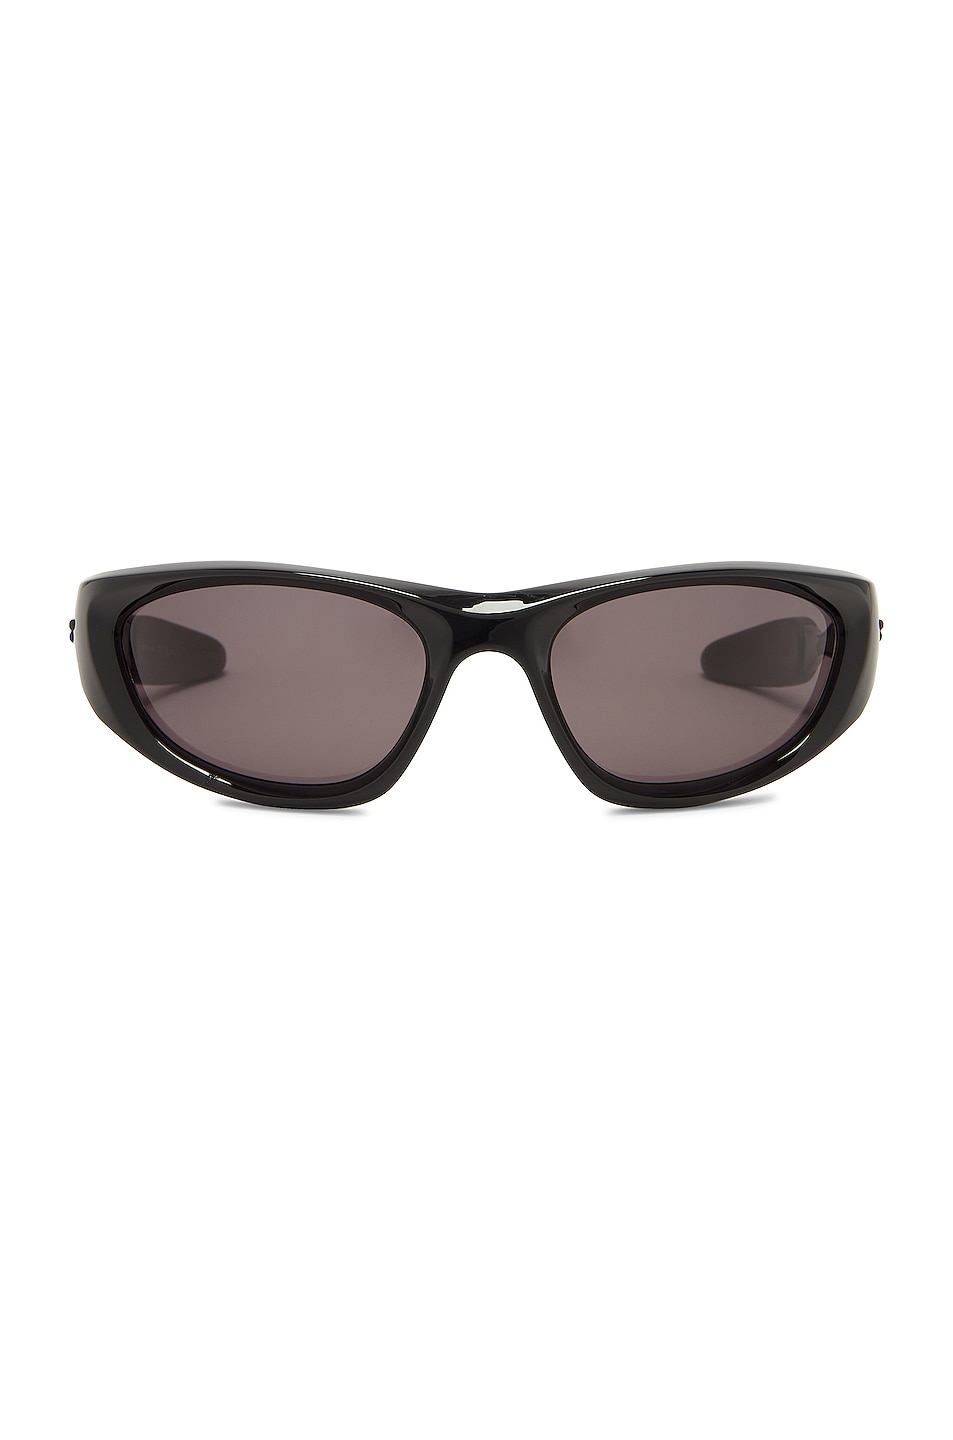 Mix Materials Sunglasses in Black